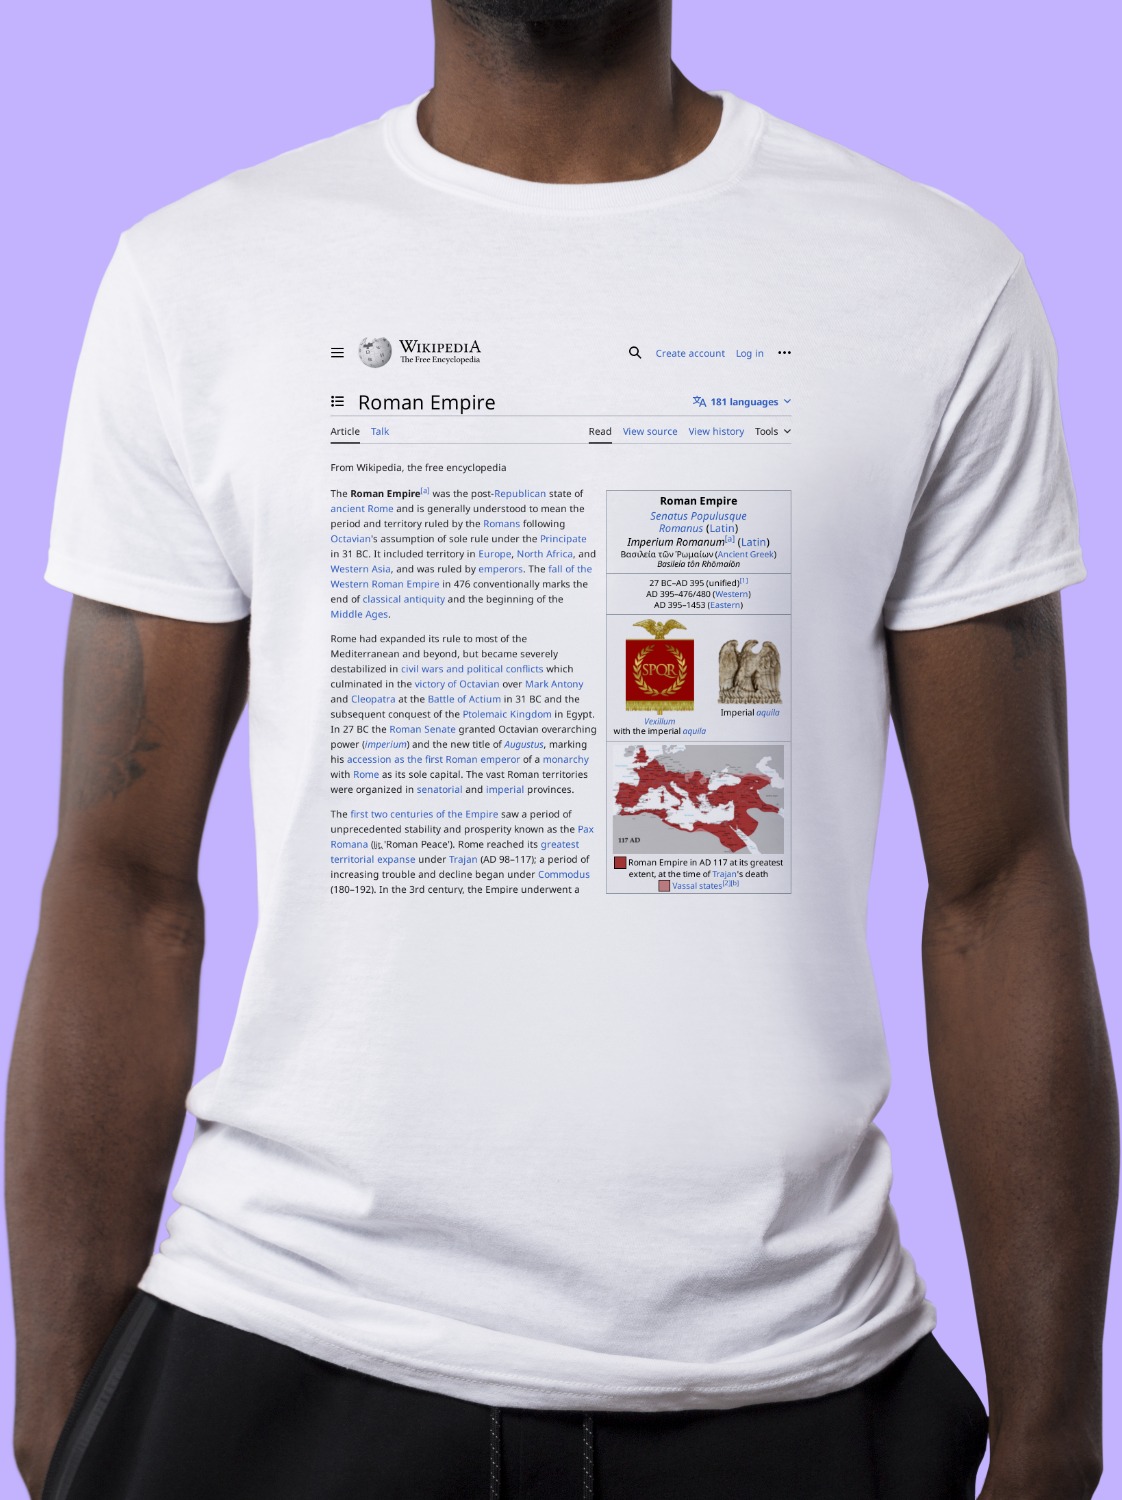 Roman_Empire Wikipedia Shirt